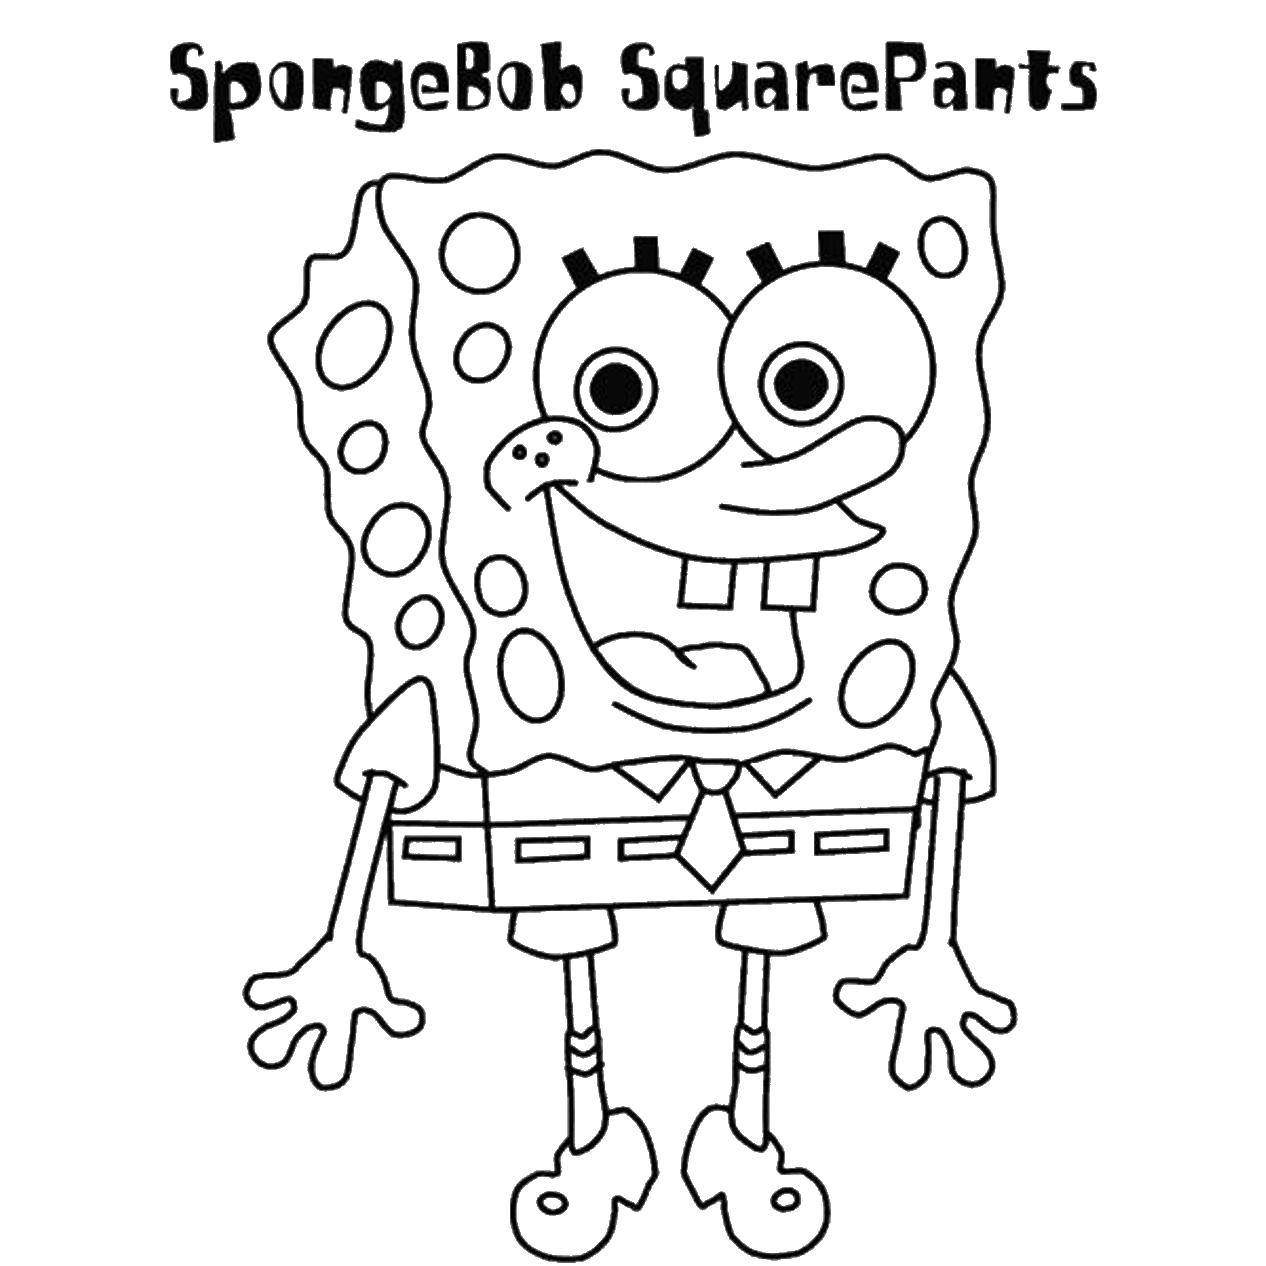 Coloring Sponge Bob square pants.. Category Spongebob. Tags:  Cartoon character, spongebob, spongebob.